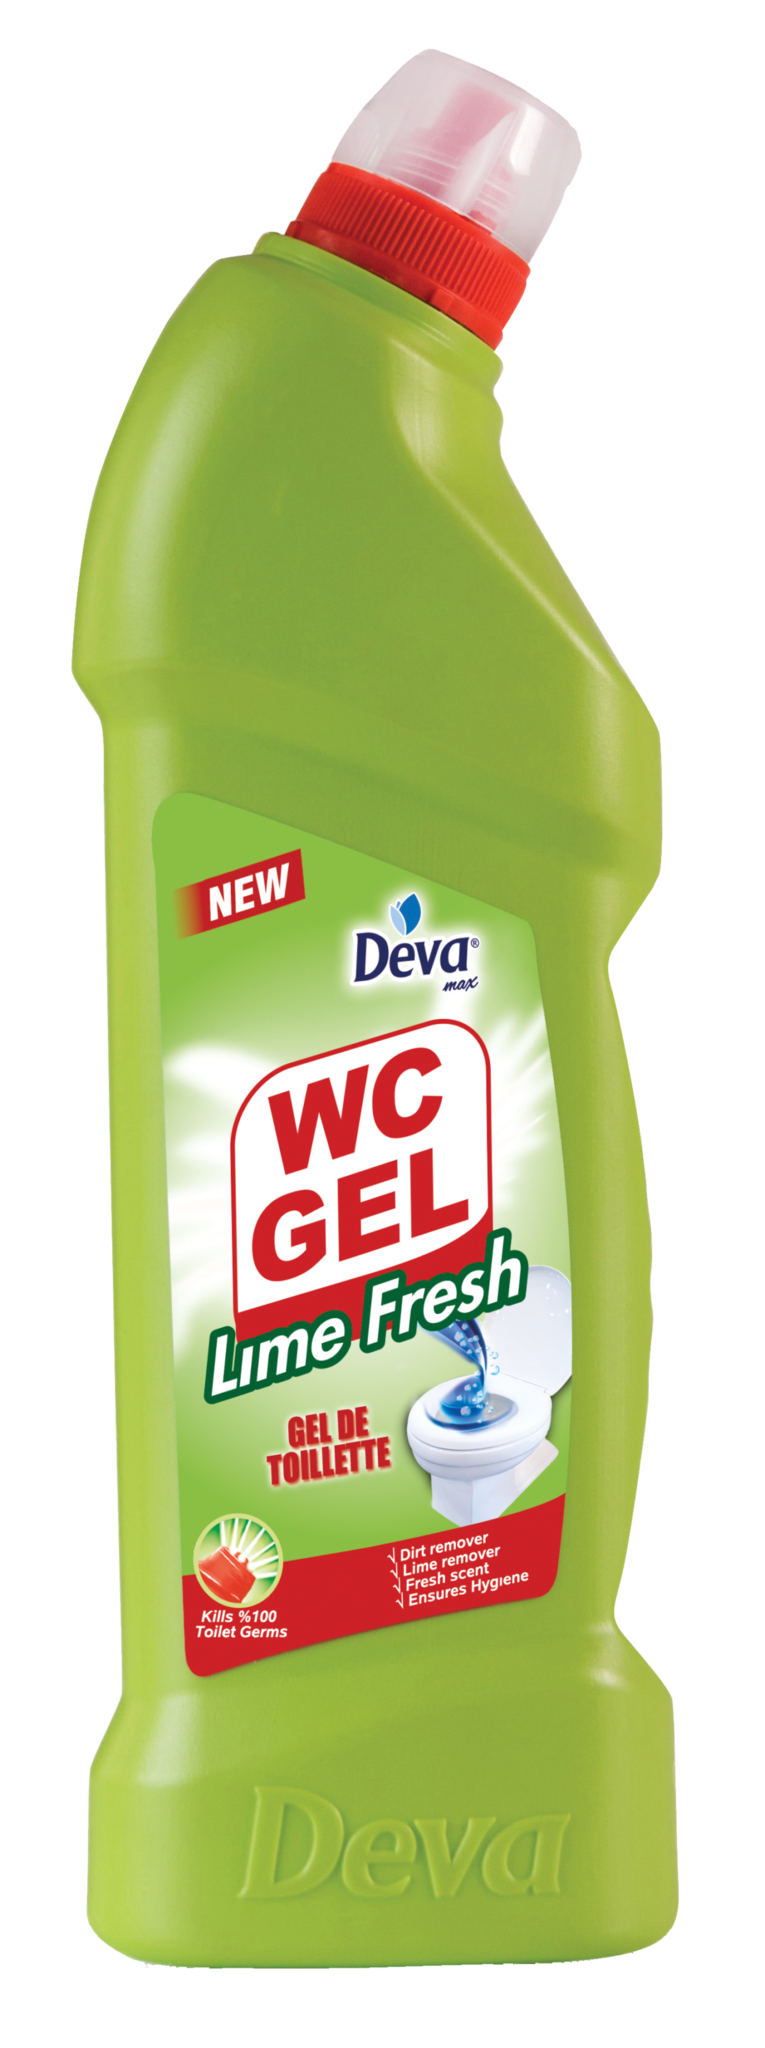 750 millilitre bottle of deva wc gel lime fresh